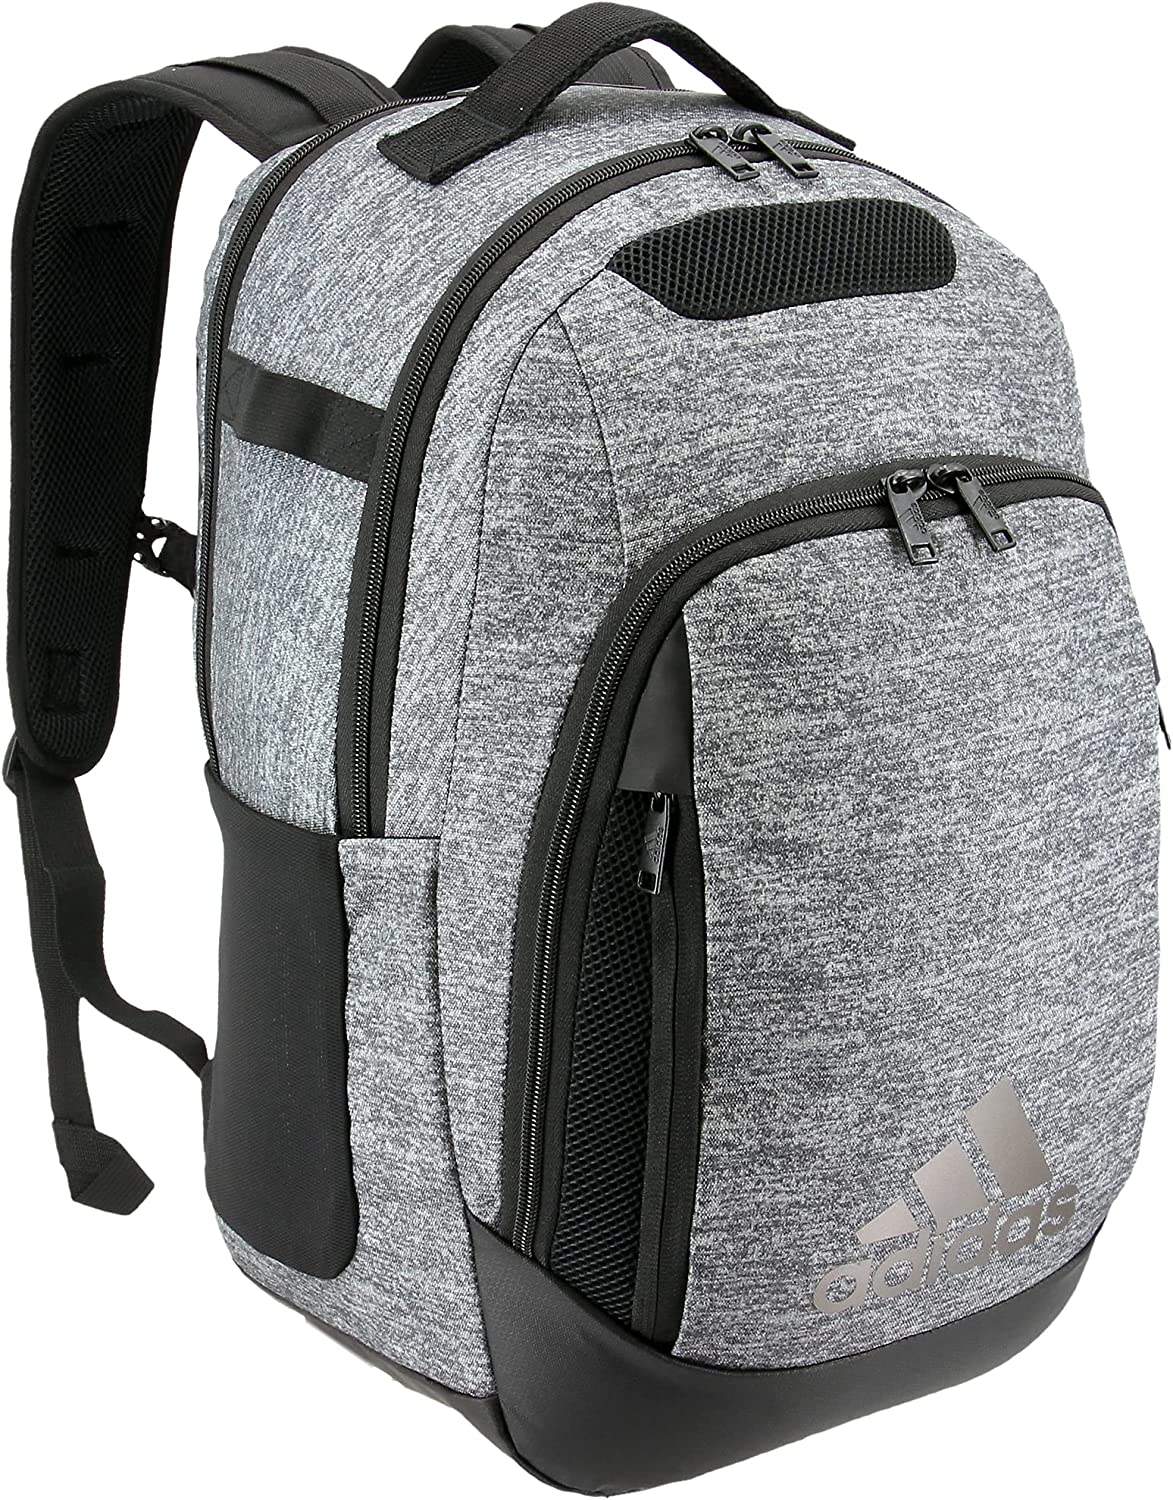 Adidas 5 Star Backpack (Team Jersey Onix Grey)